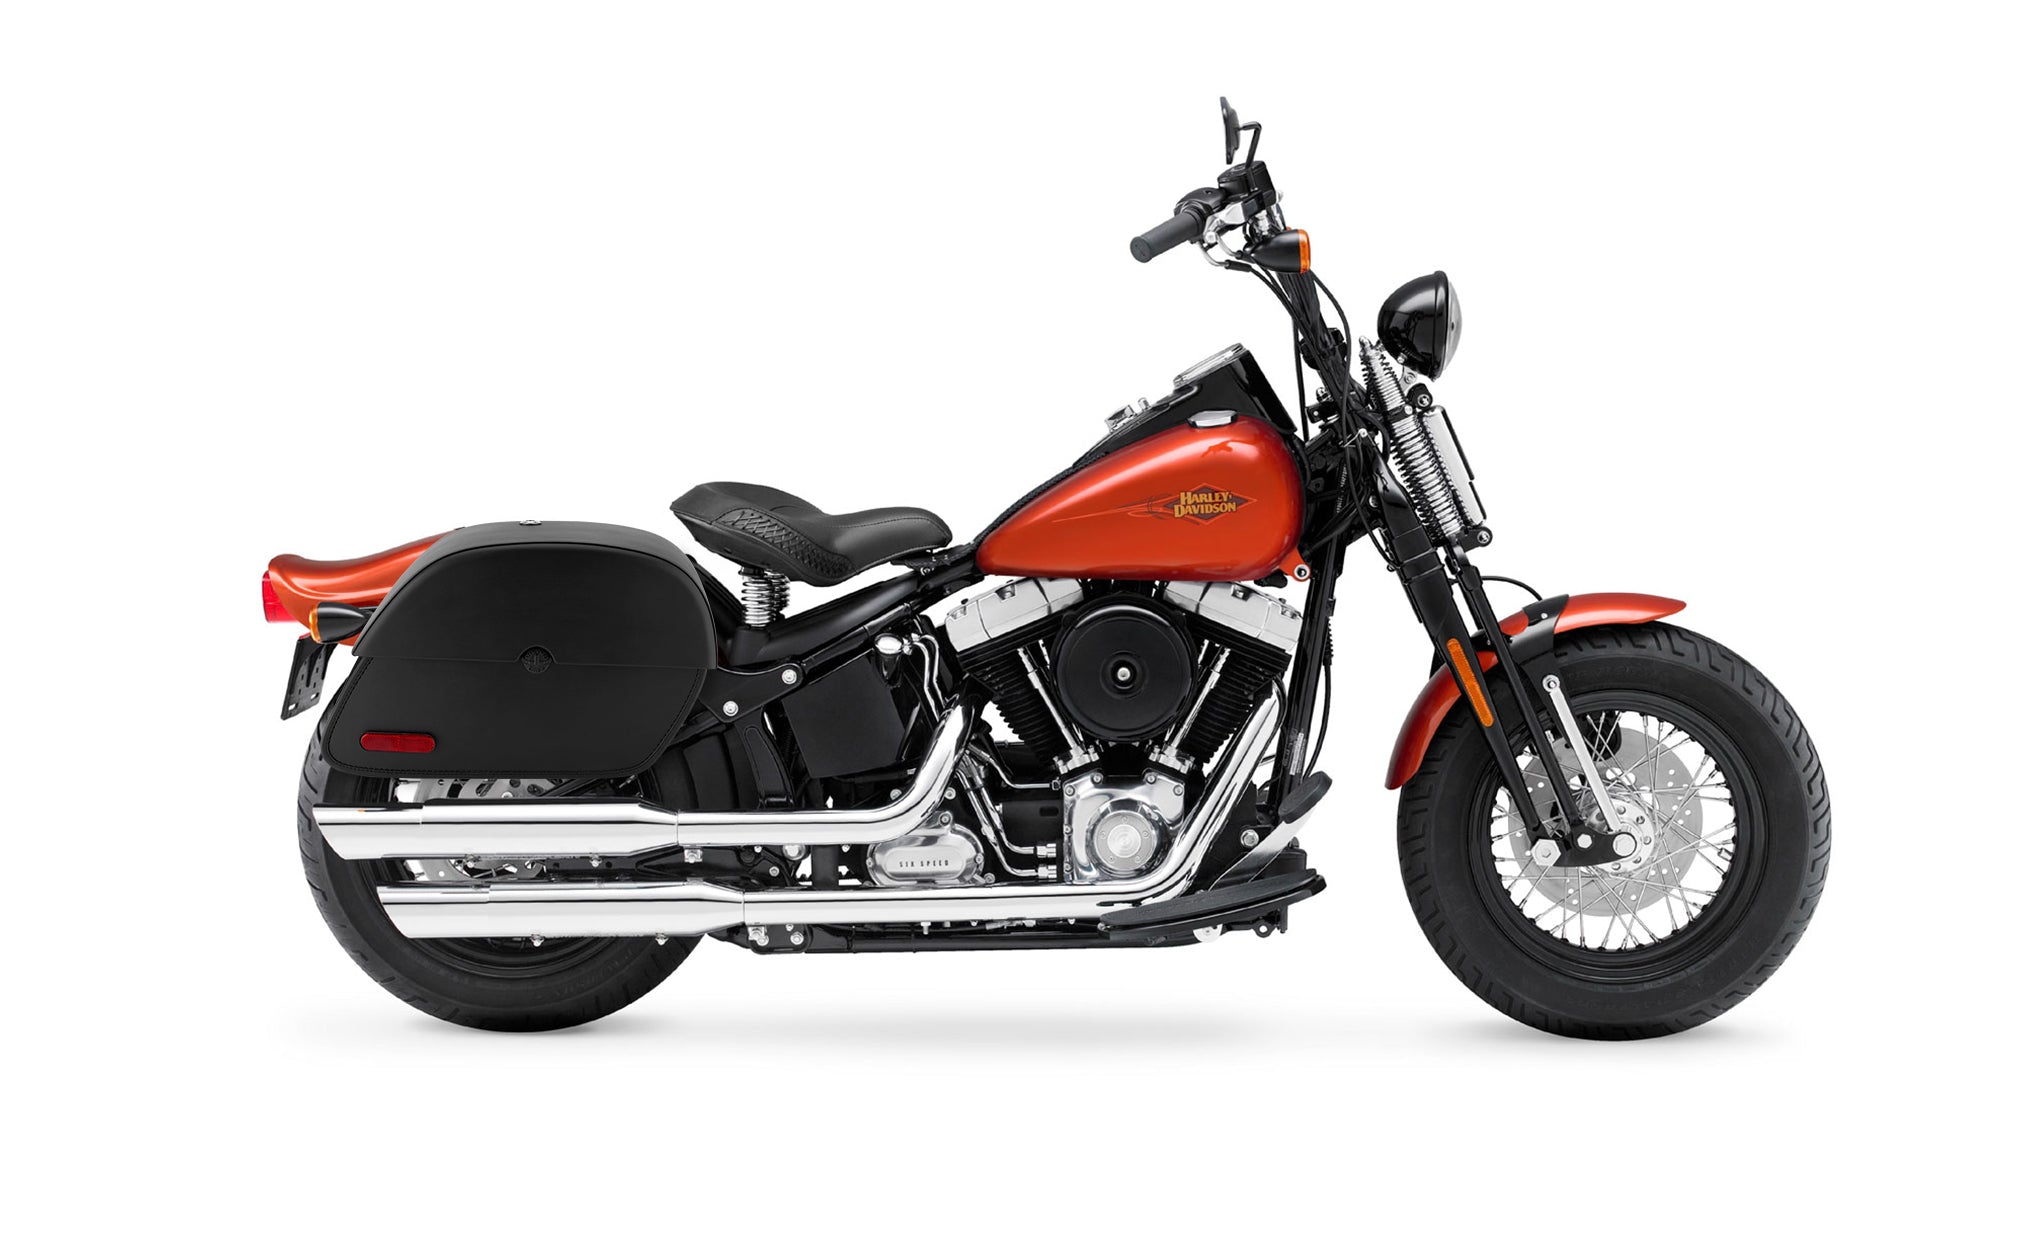 Viking Panzer Large Leather Motorcycle Saddlebags For Harley Davidson Softail Cross Bones Flstsb on Bike Photo @expand